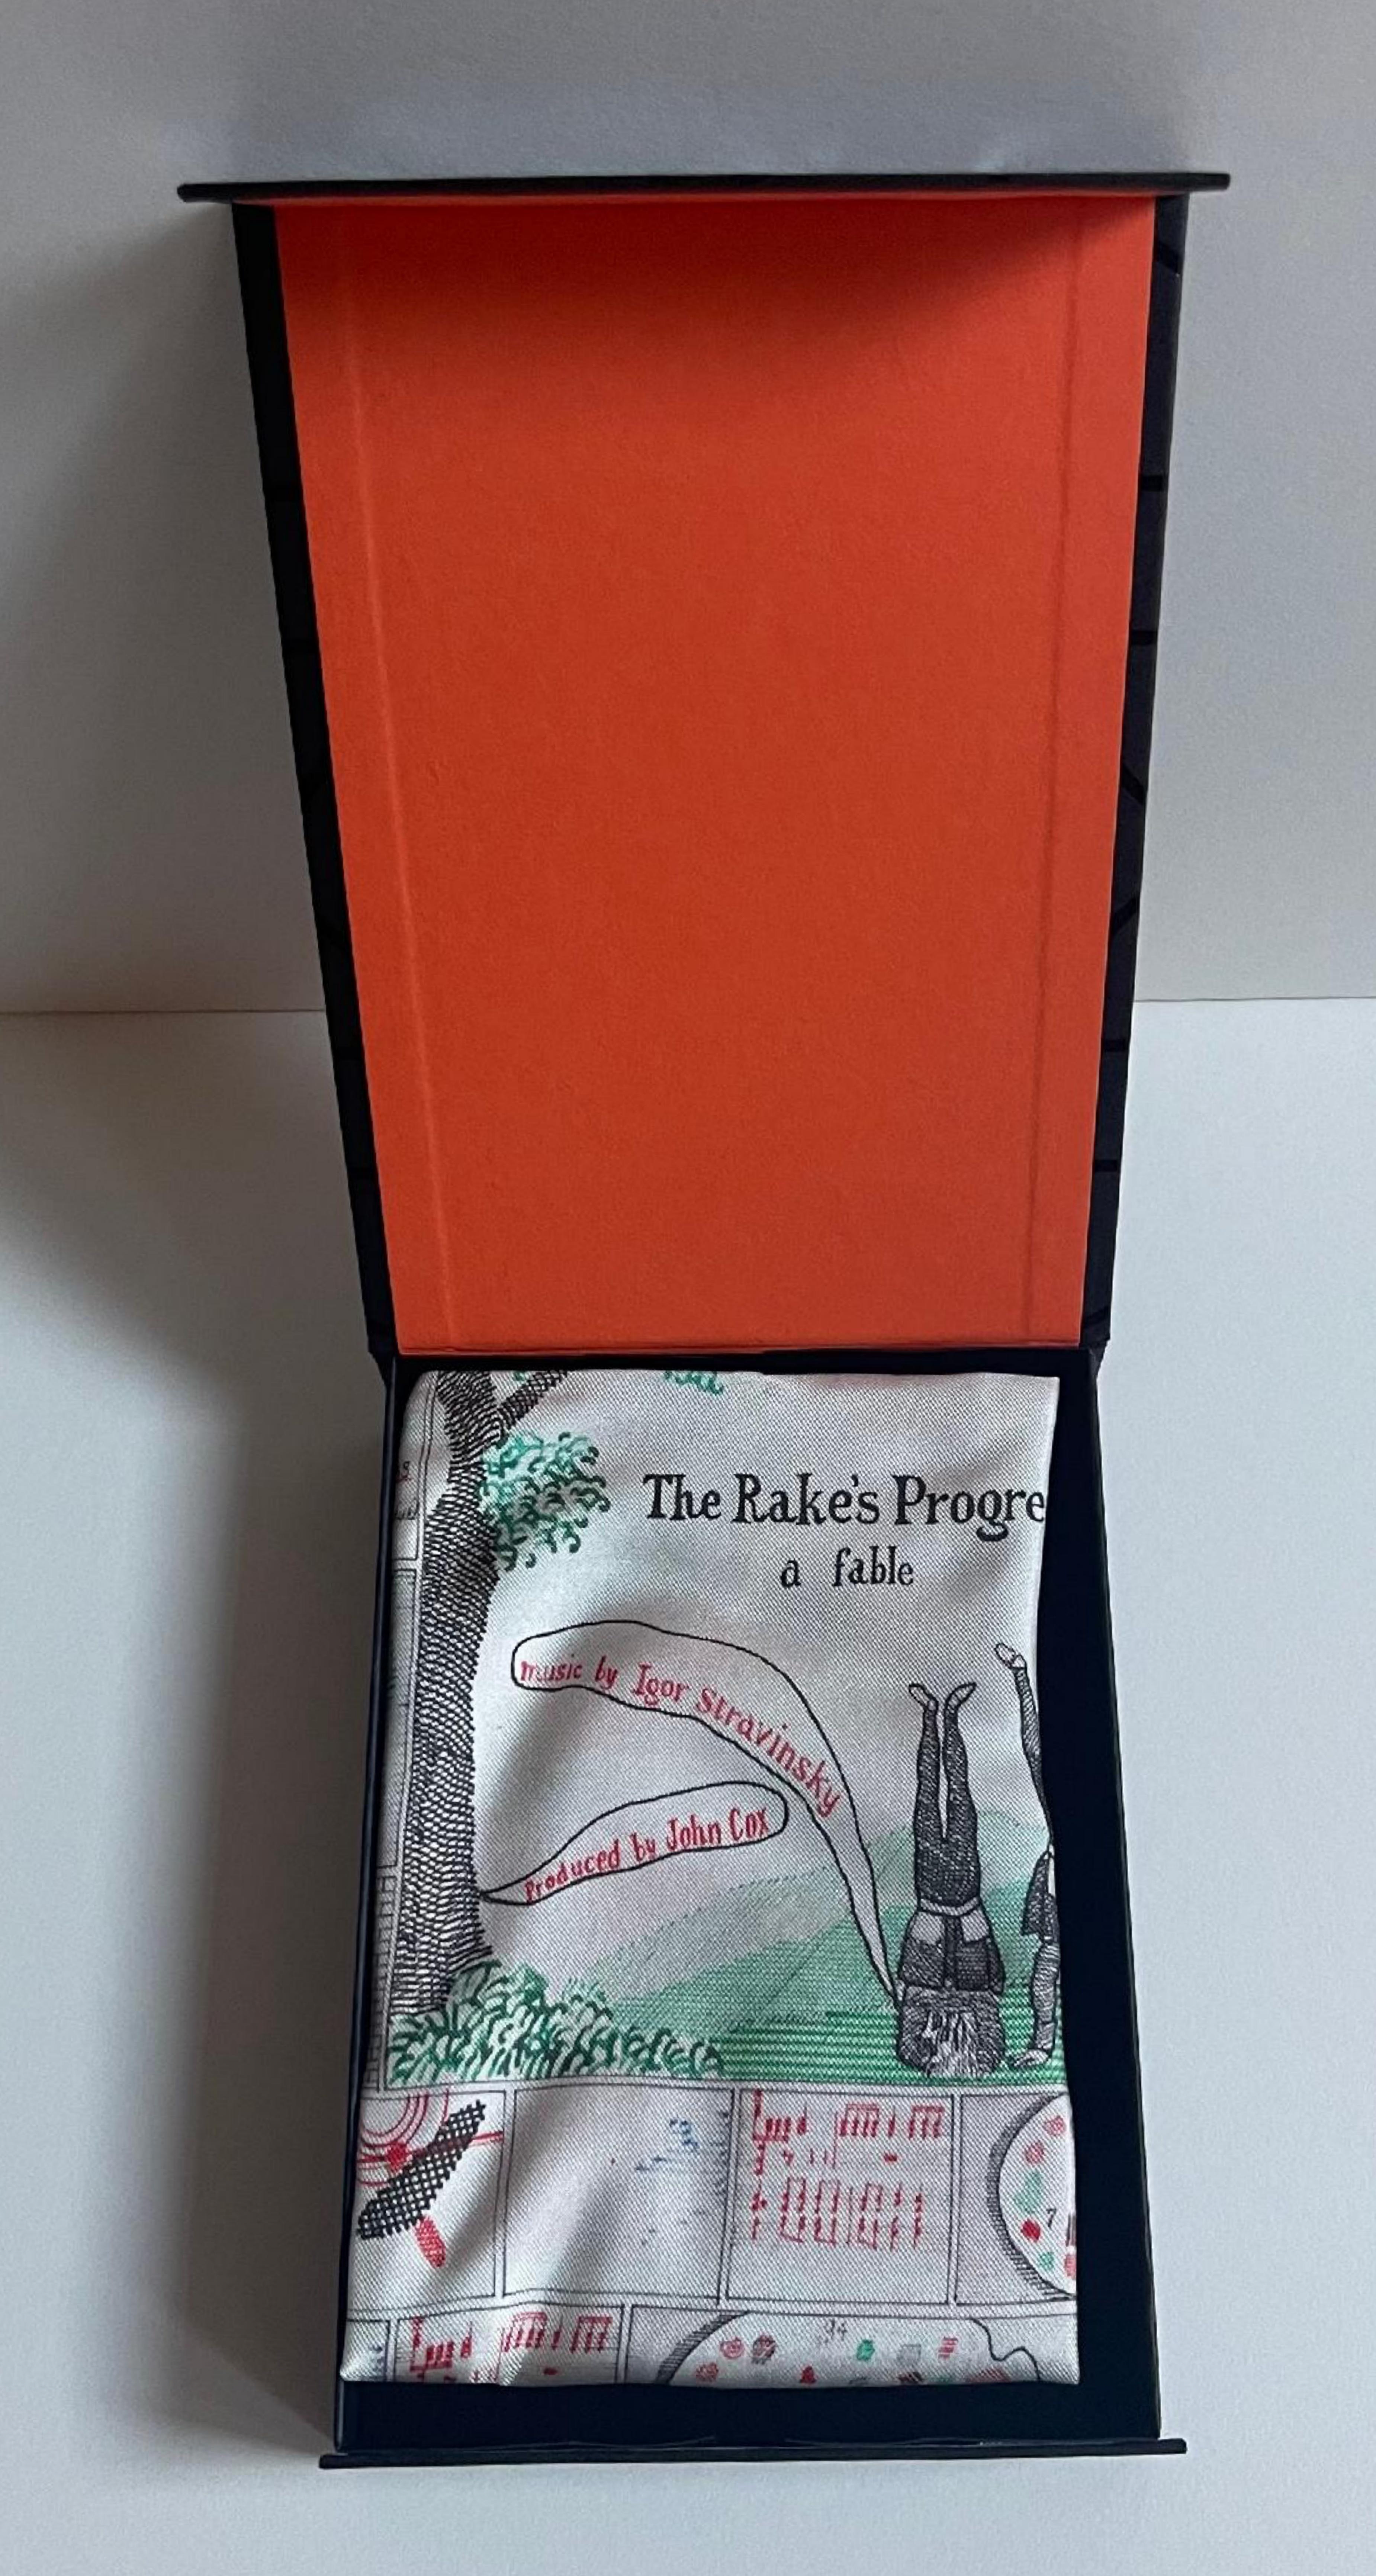 The Rake's Progress 100% Silk Pocket Scarf in bespoke gift box - Pop Art Mixed Media Art by David Hockney